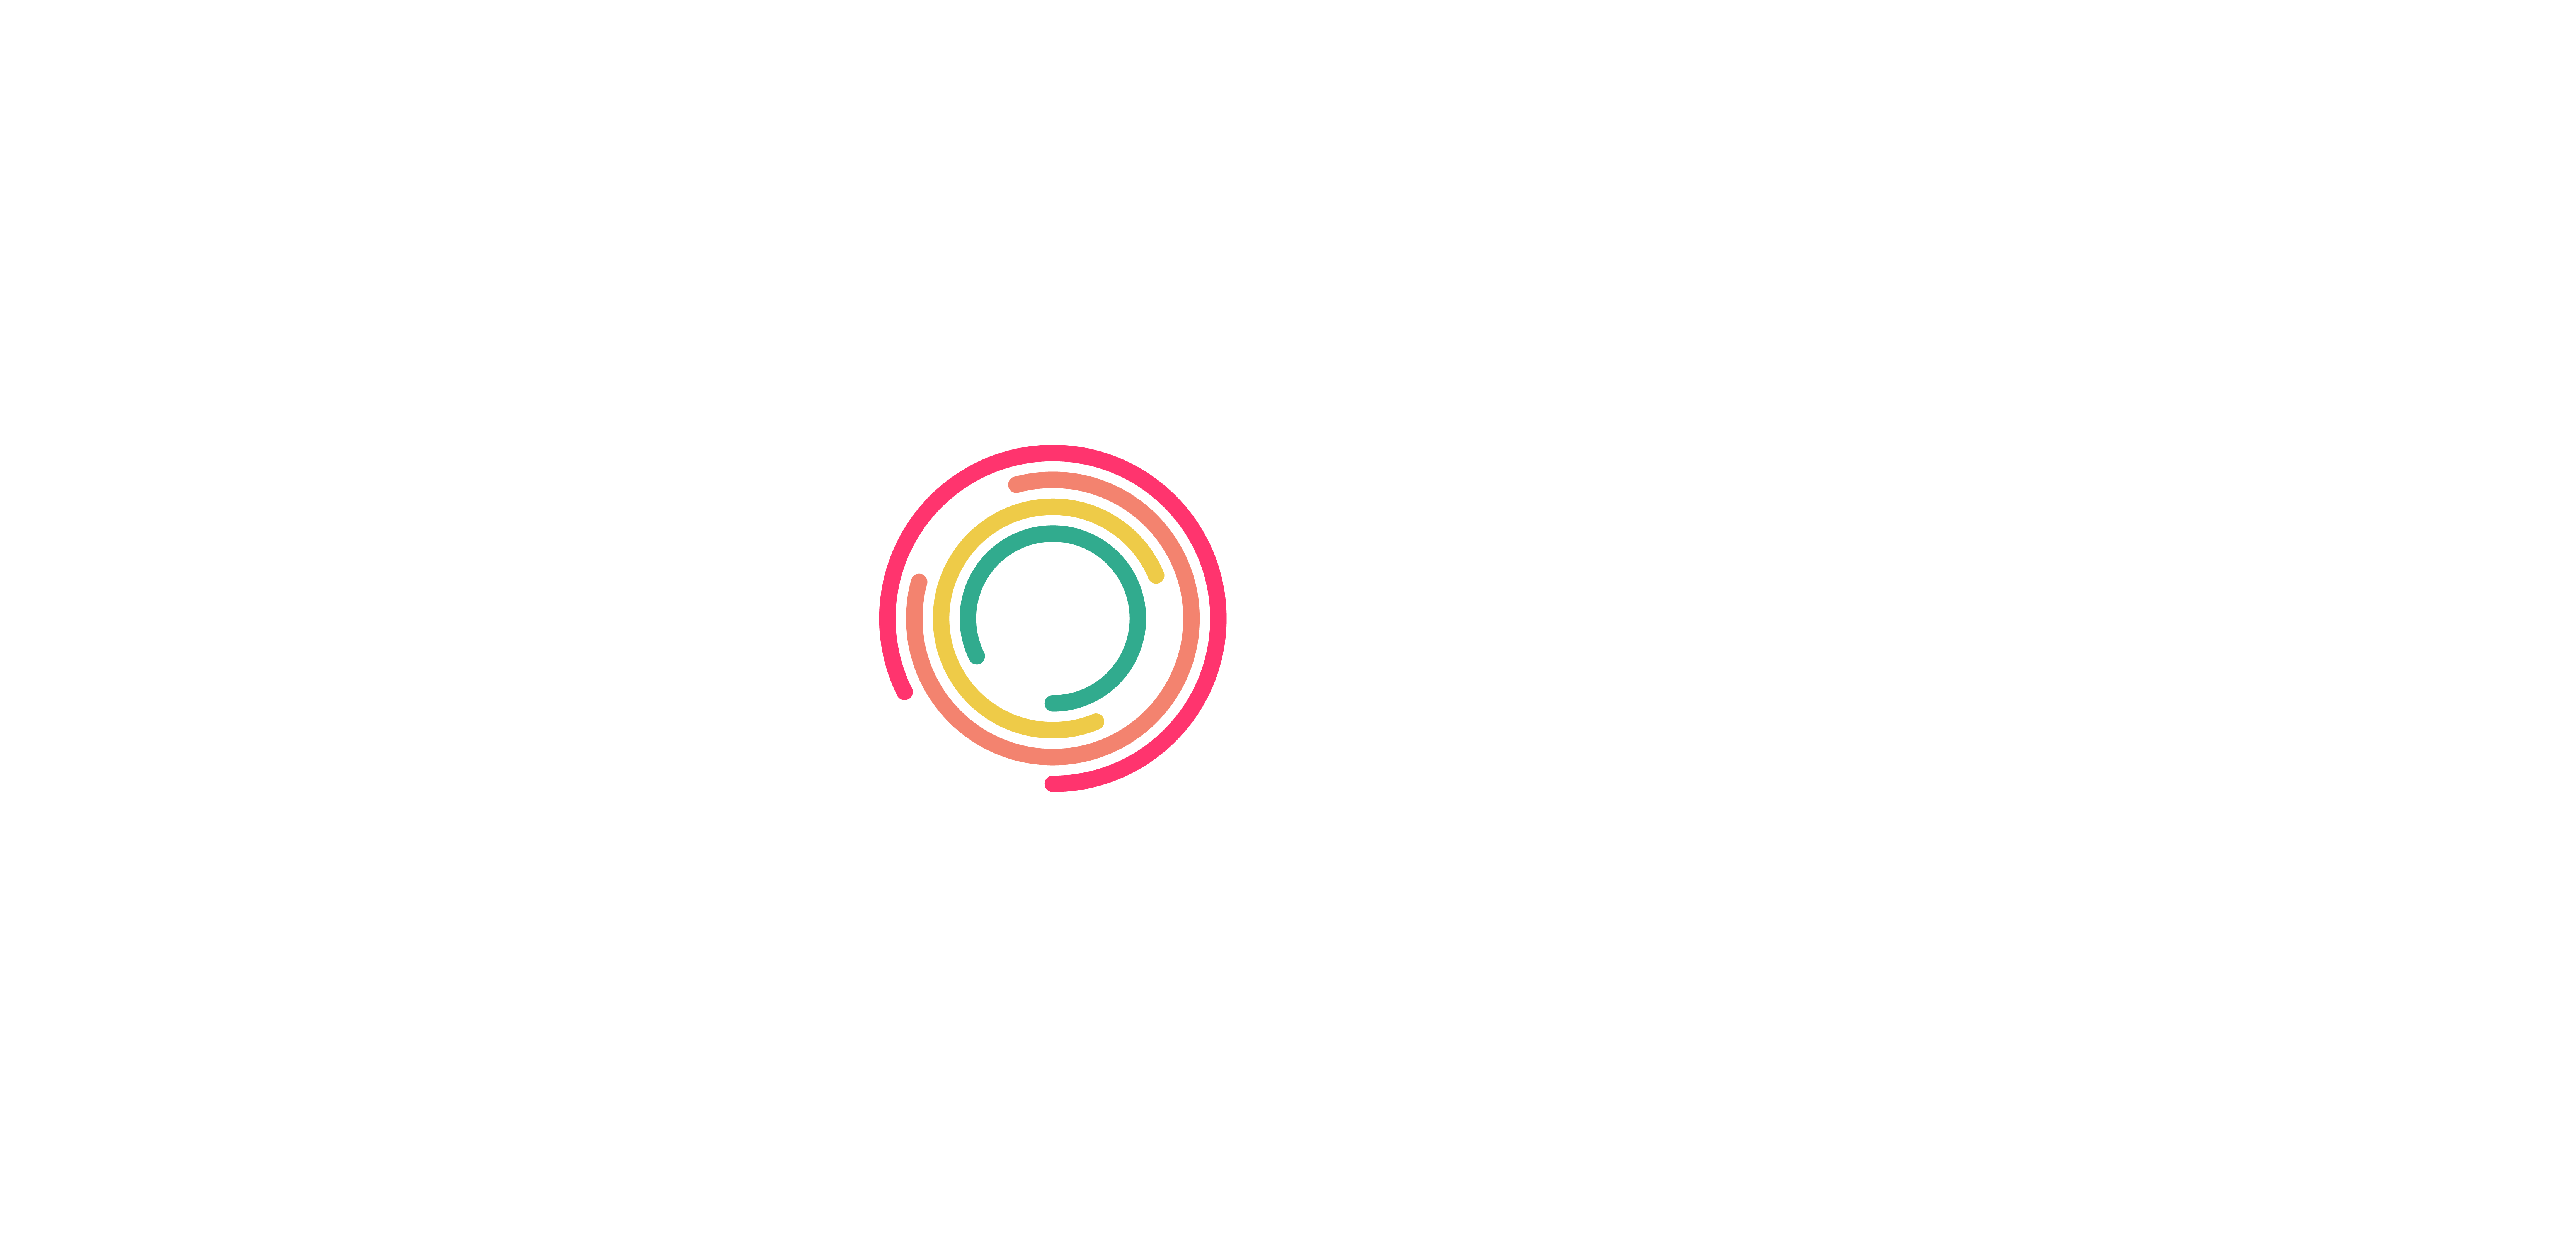 Durban – EO South Africa